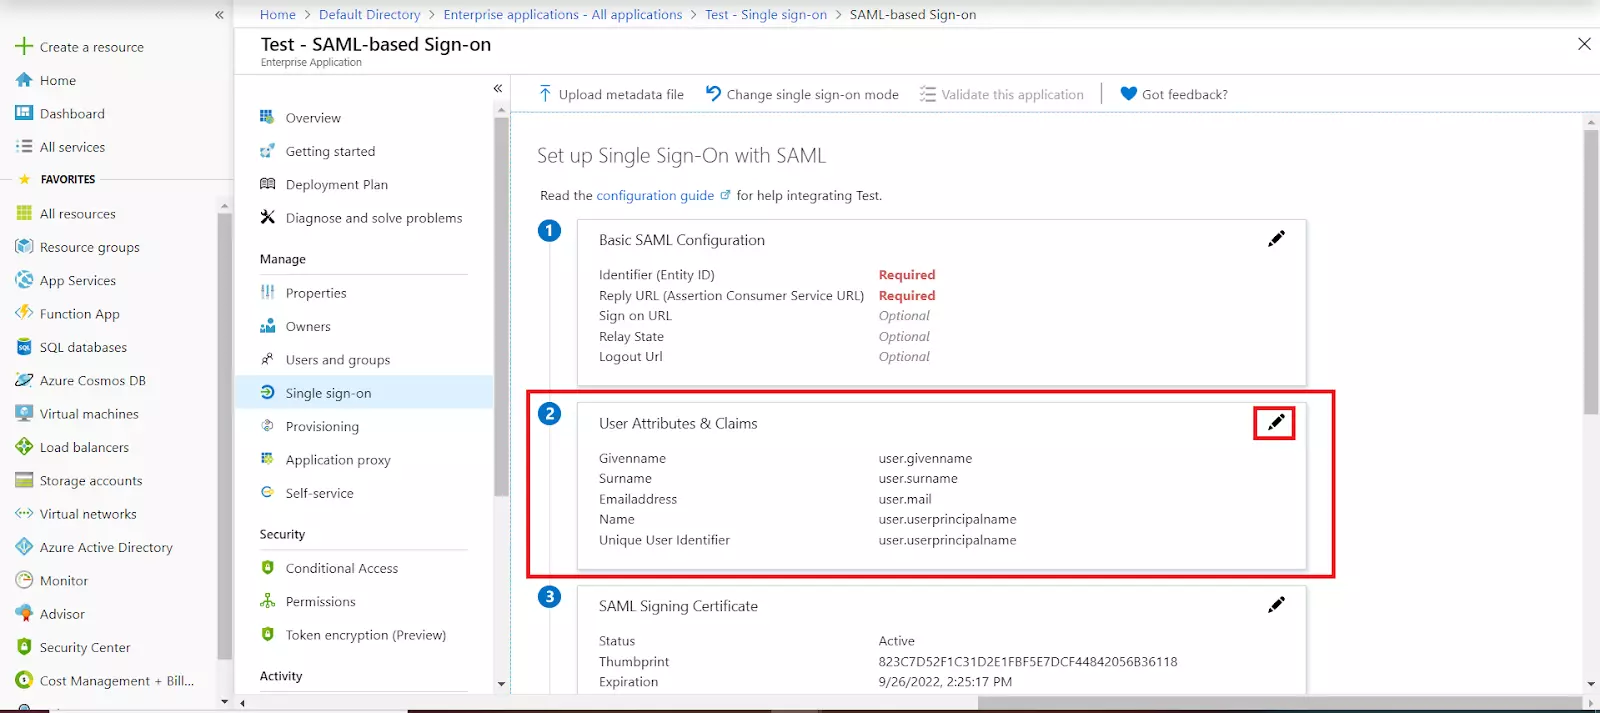 SAML Single Sign-On (SSO) using Azure AD as Identity Provider (IdP),for SAML 2.0 Login -  Azure AD User attributes